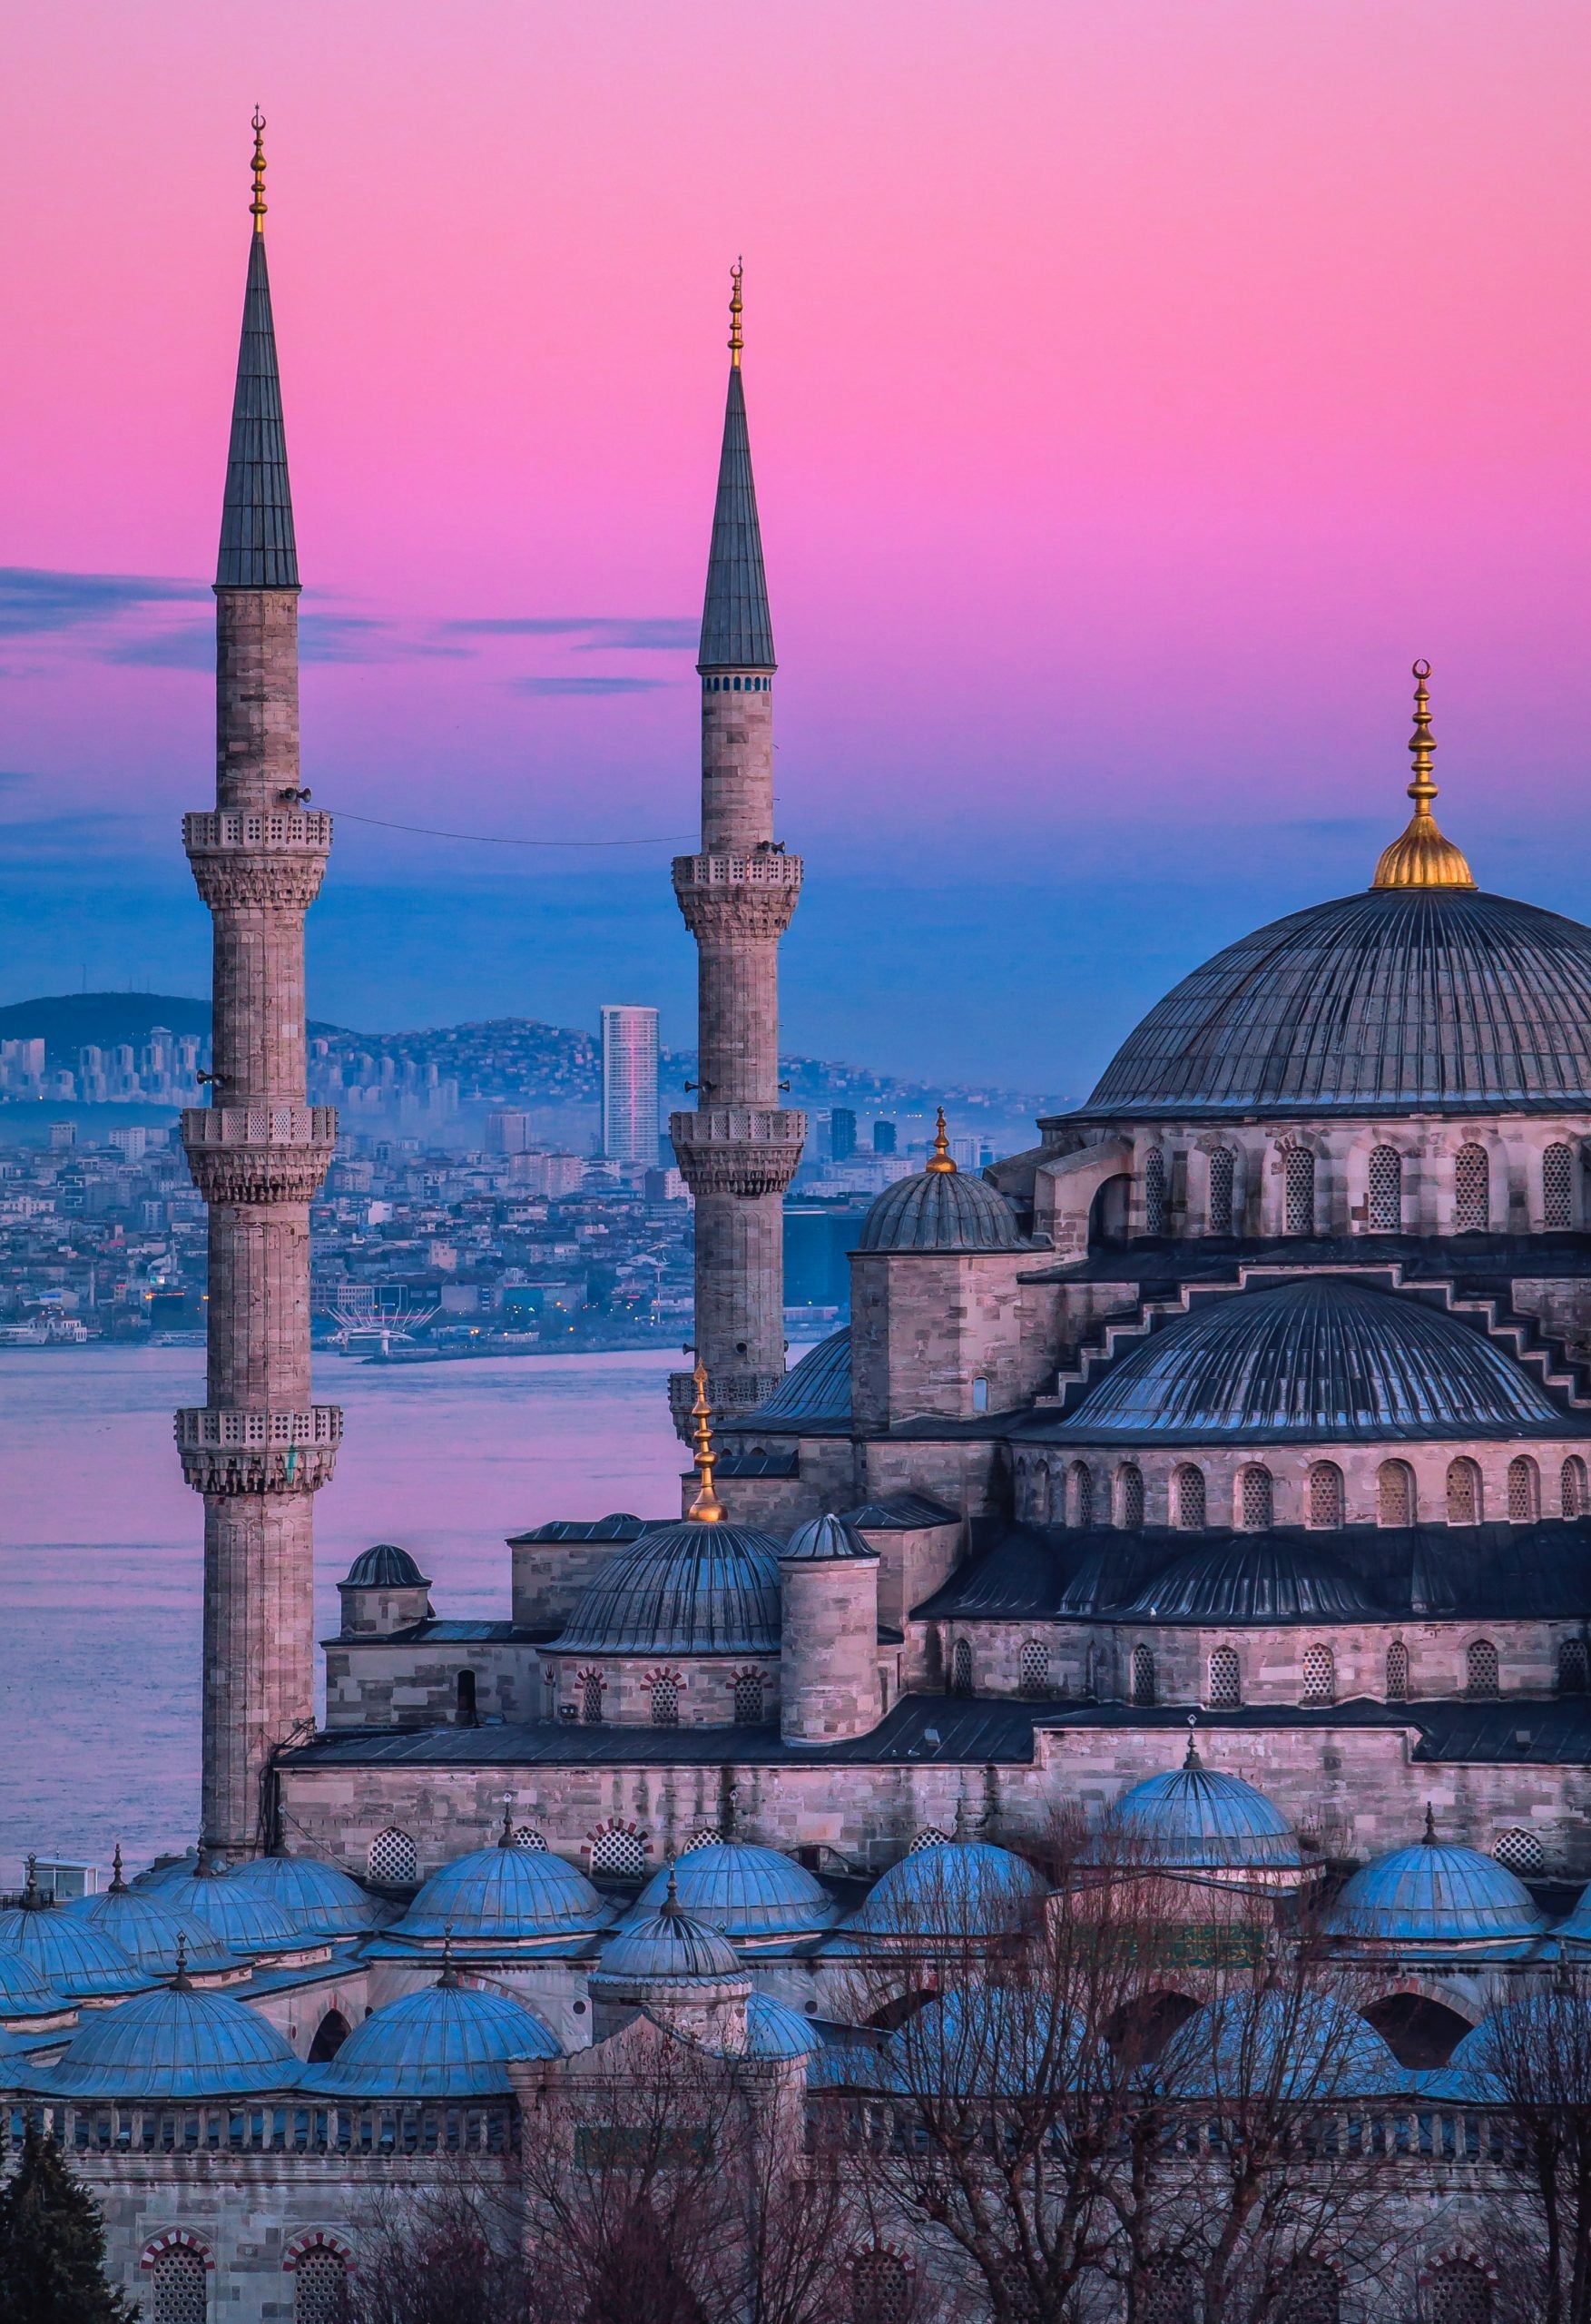 mezquita azul sunset scaled viajes a medida y viajes de novios